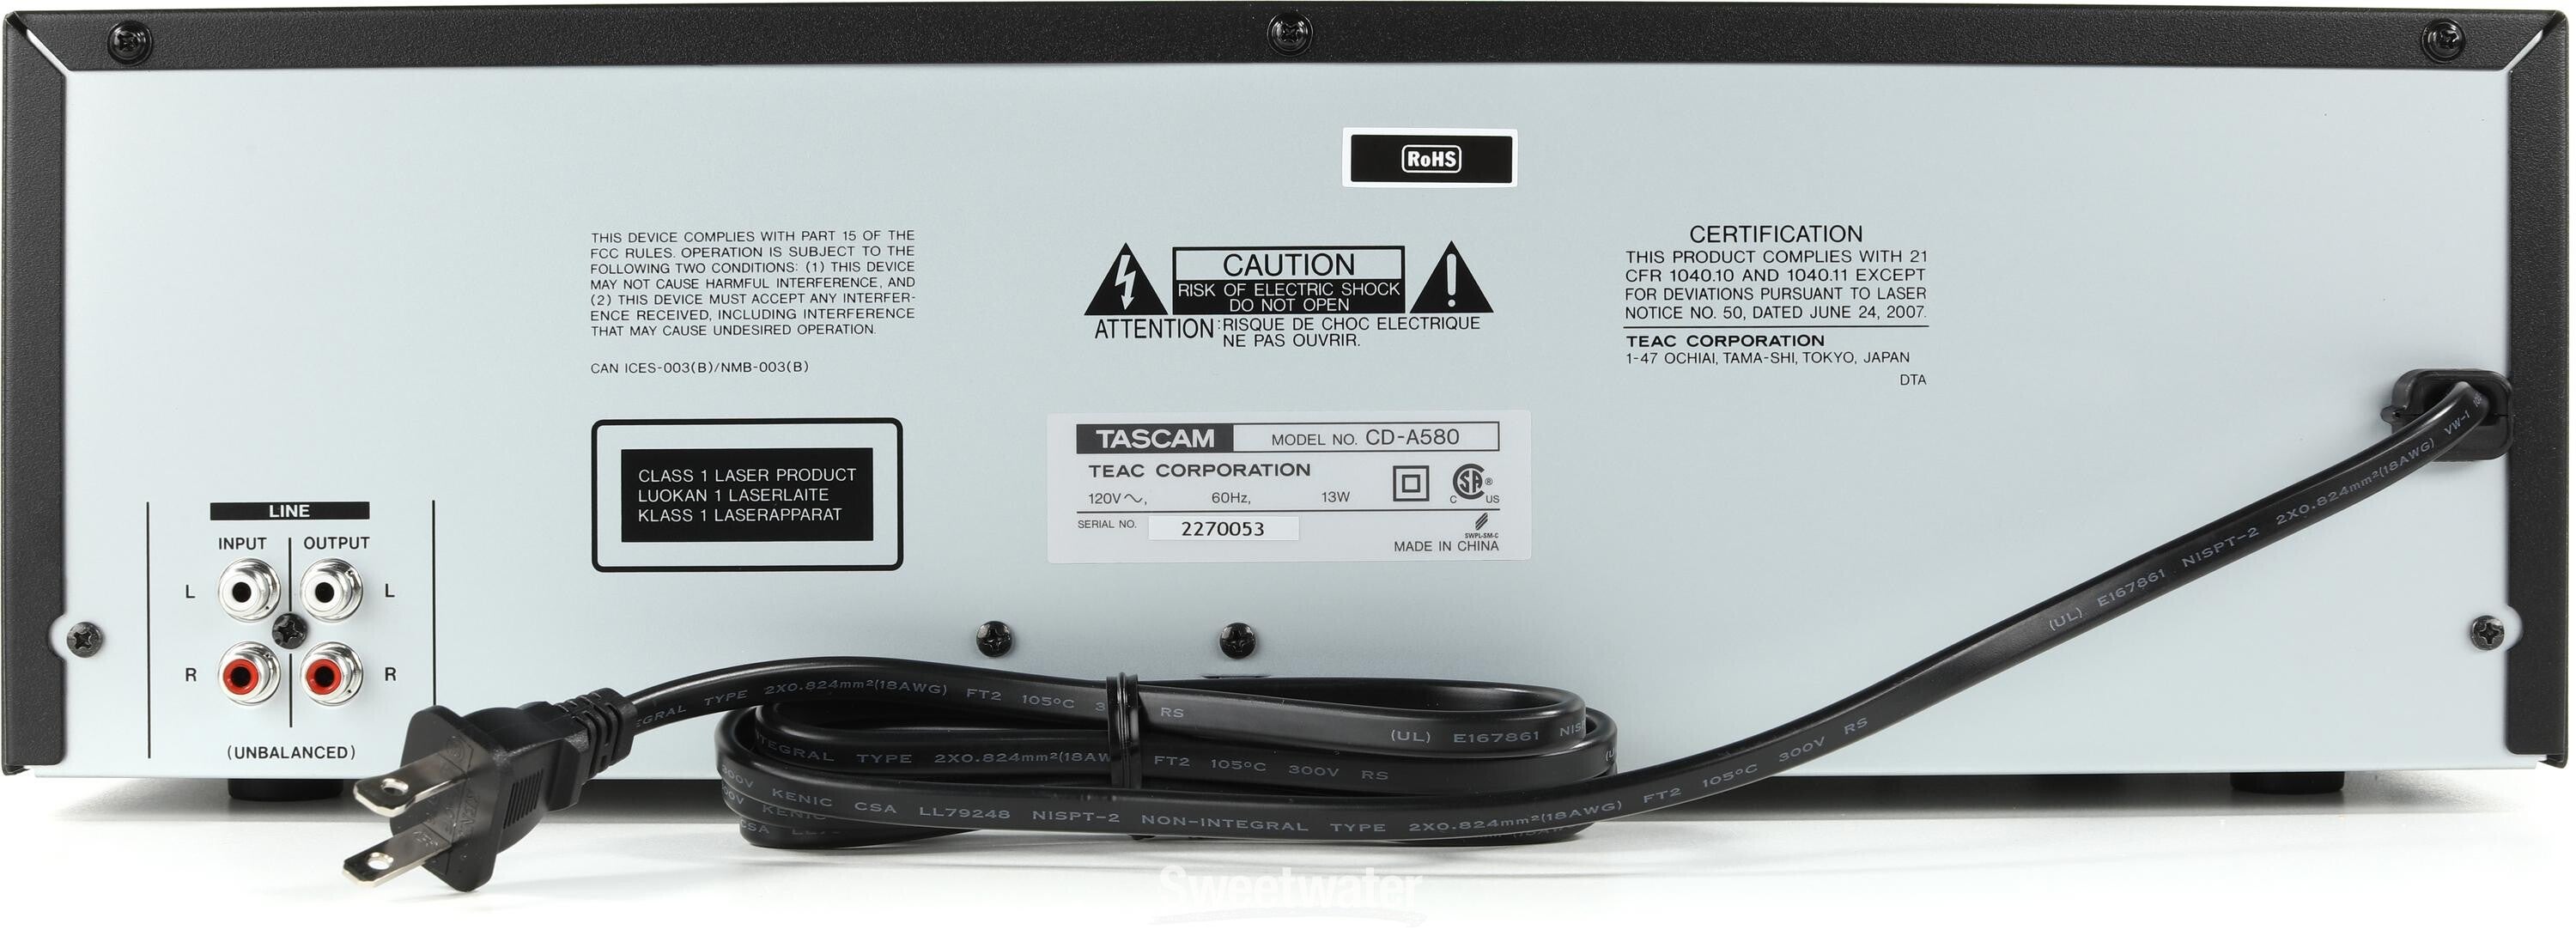 TASCAM CD-A580-V2 CD/USB/Cassette Player/Recorder | Sweetwater